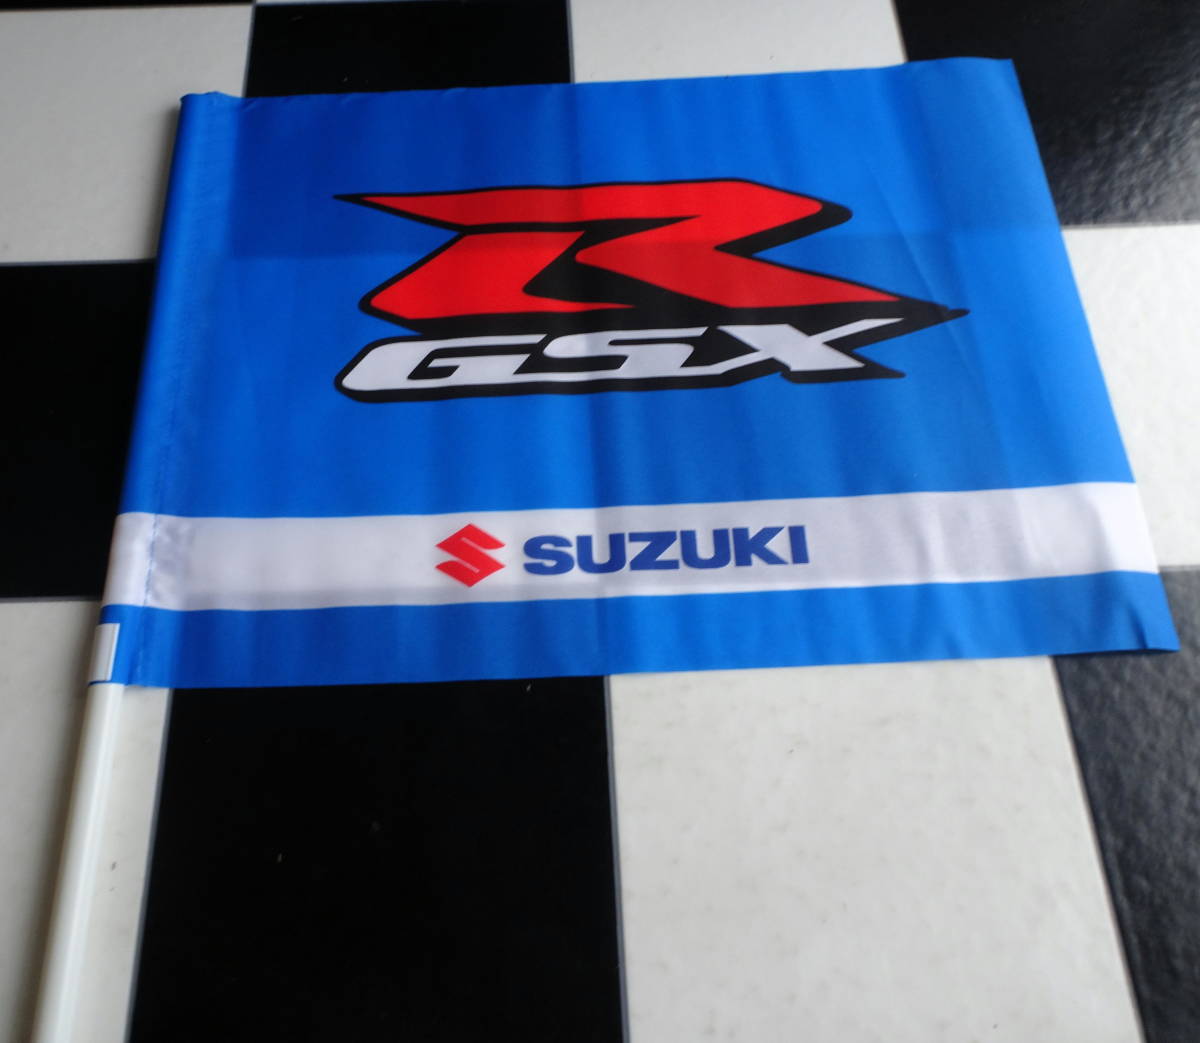 SUZUKI RACING TEAM応援フラッグ+スズキGSX-R応援フラッグ 2本セット+ECSTARキーホルダー 合計3点セット GSX-１０００R・RR MotoGP